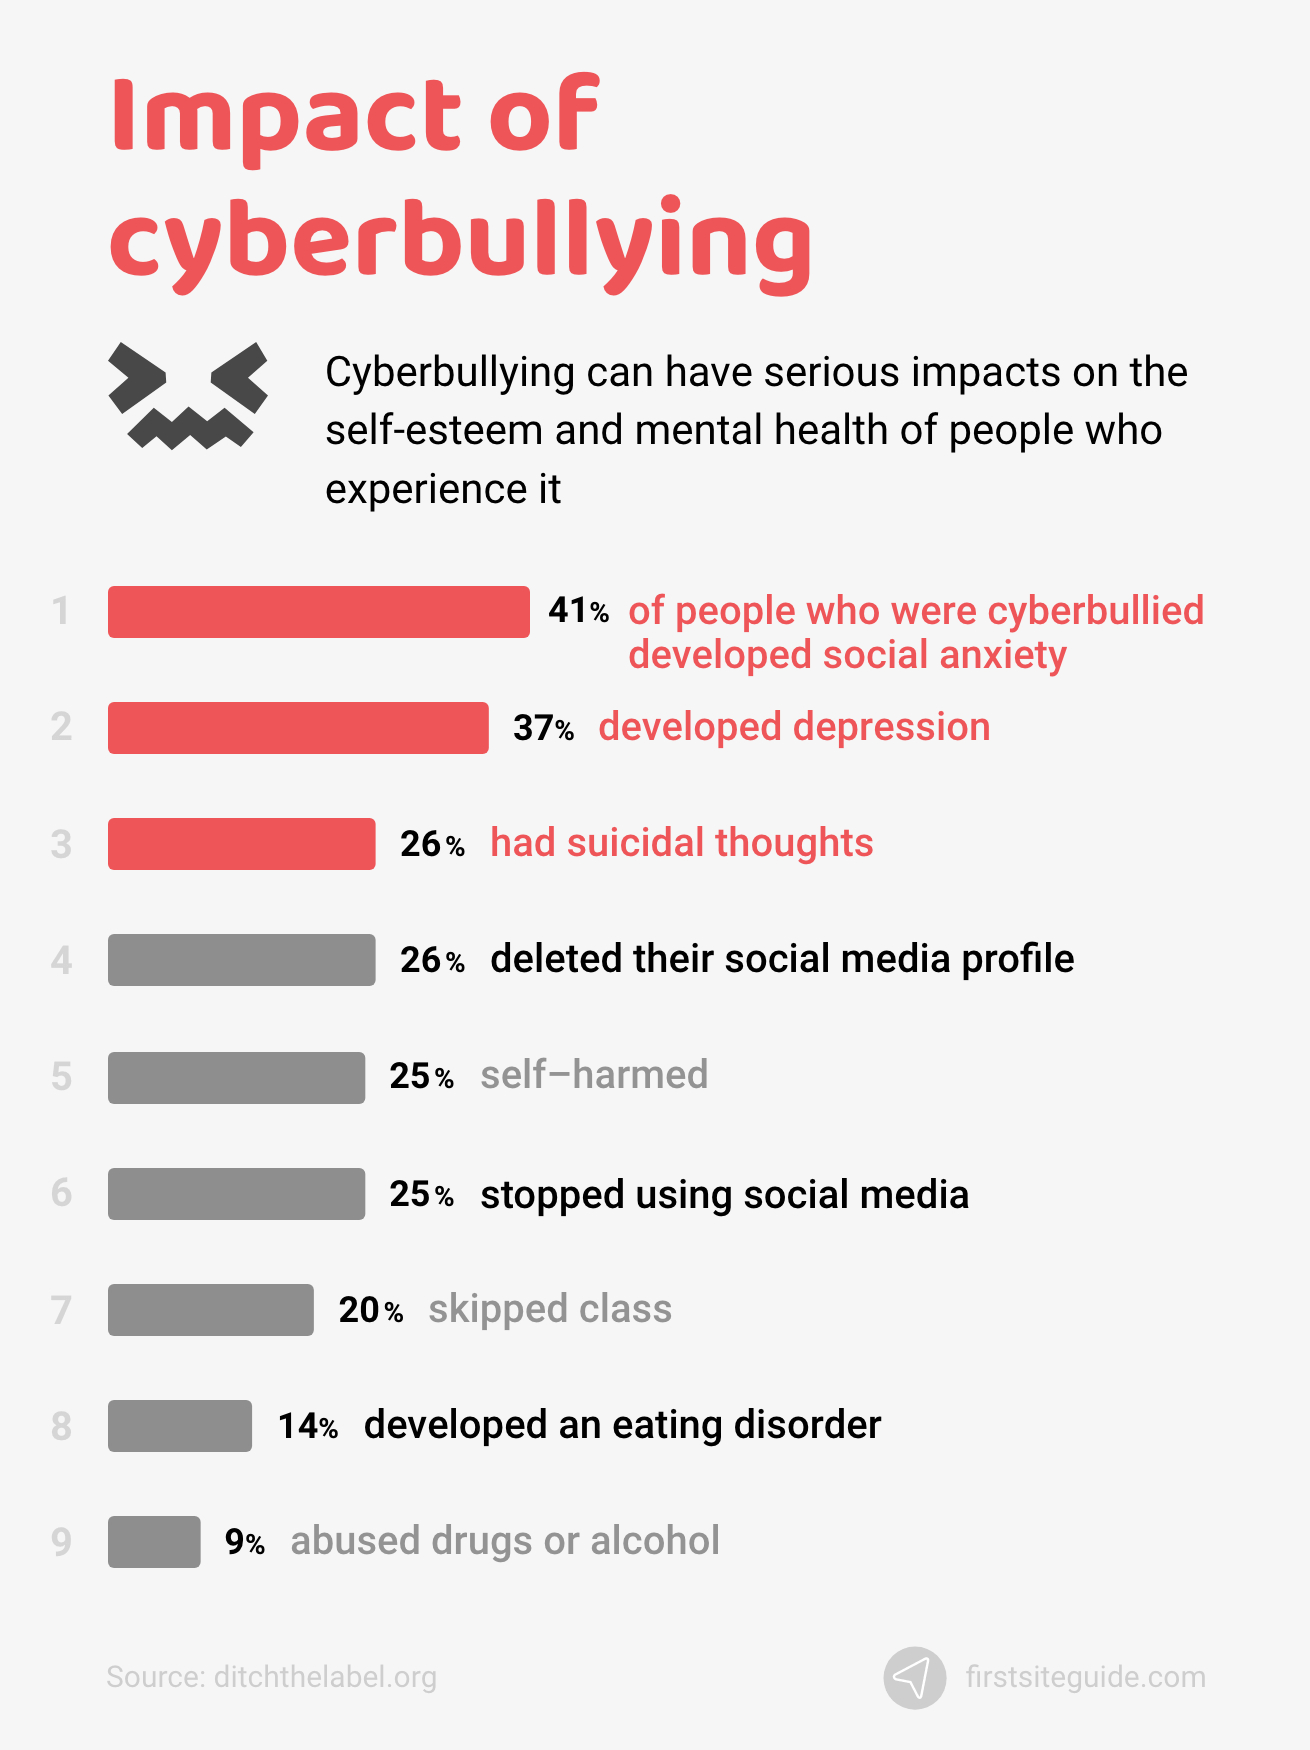 Dampak dari cyberbullying